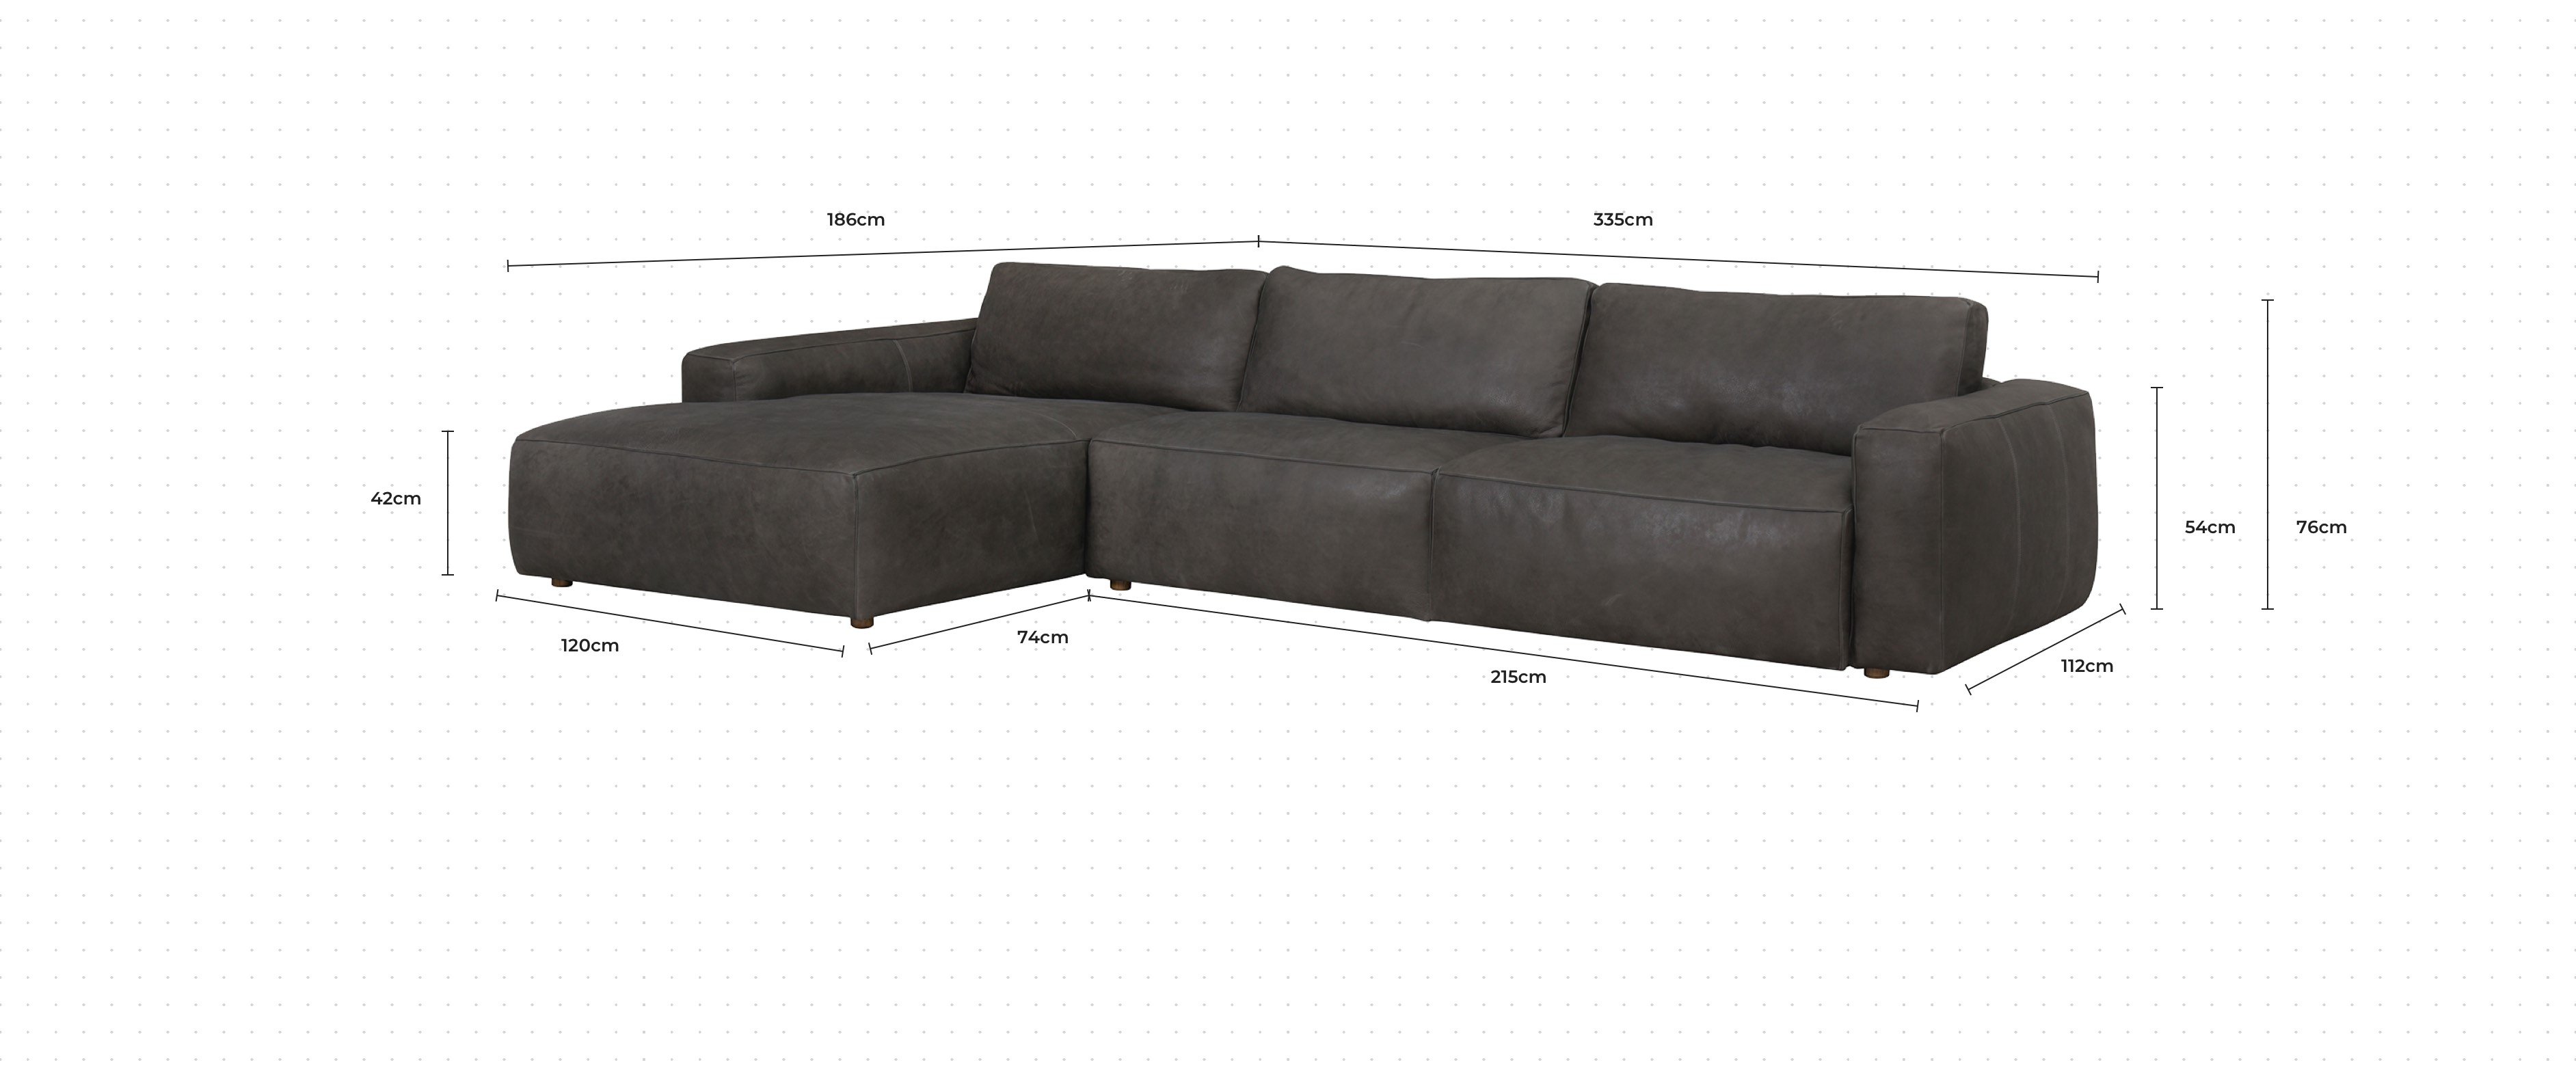 Truffle Large Chaise Sofa LHF dimensions